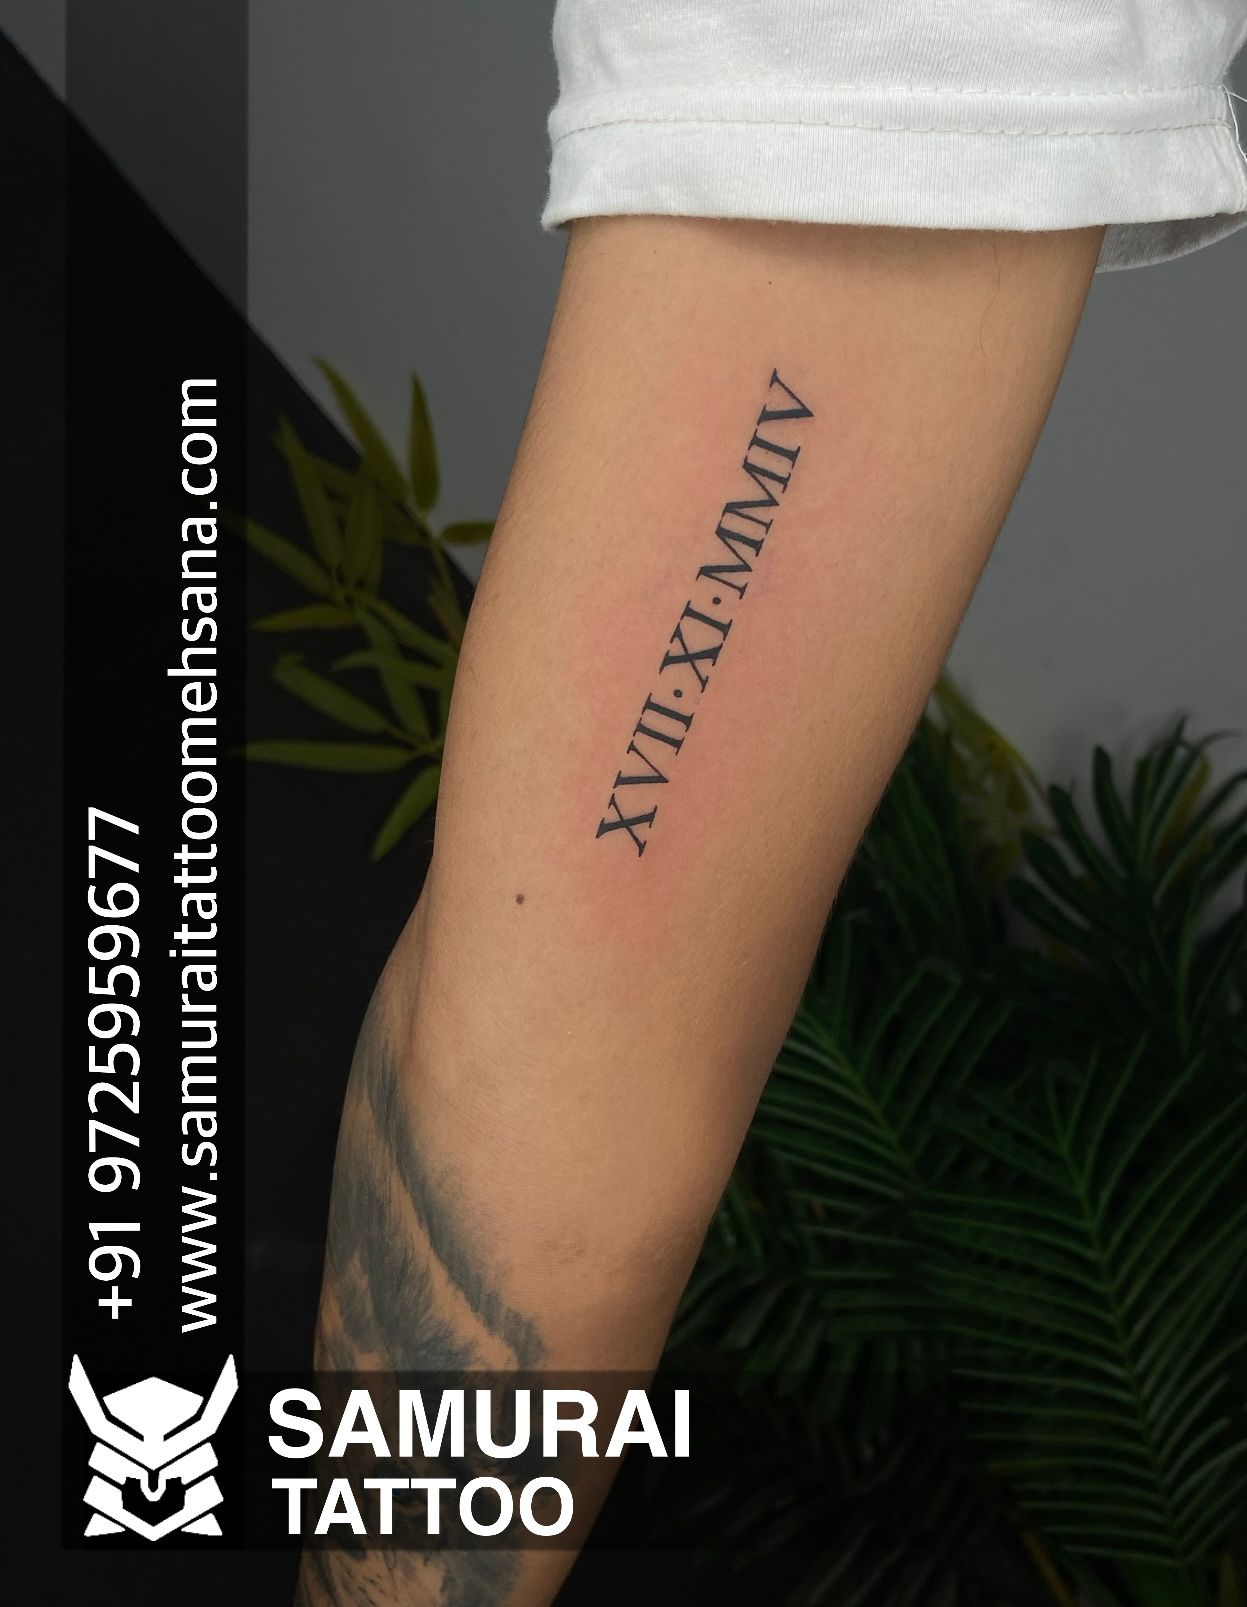 250 Birth Date Tattoos Ideas 2020 Roman Numeral Designs With Beautiful  Fonts  Date tattoos Discreet tattoos Subtle tattoos